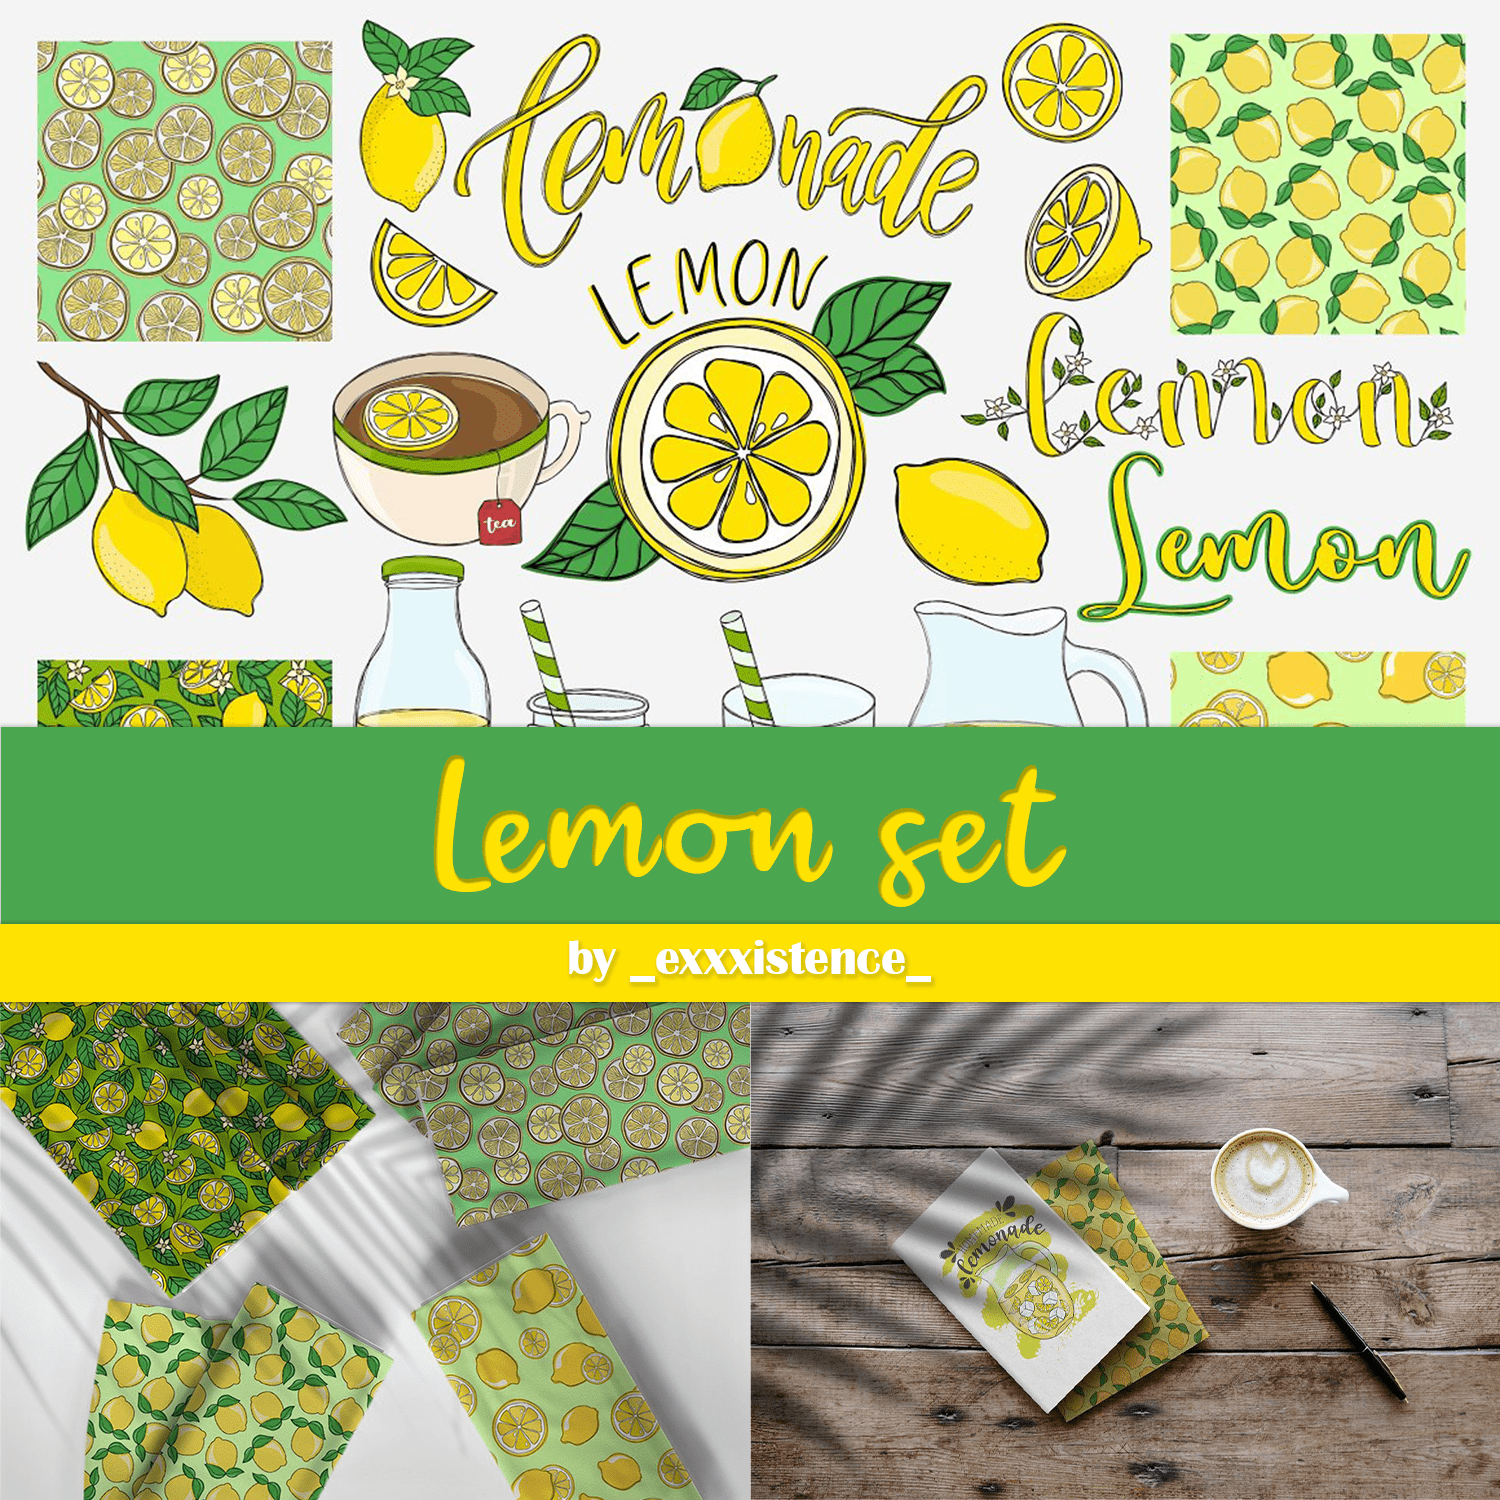 Lemon set cover.